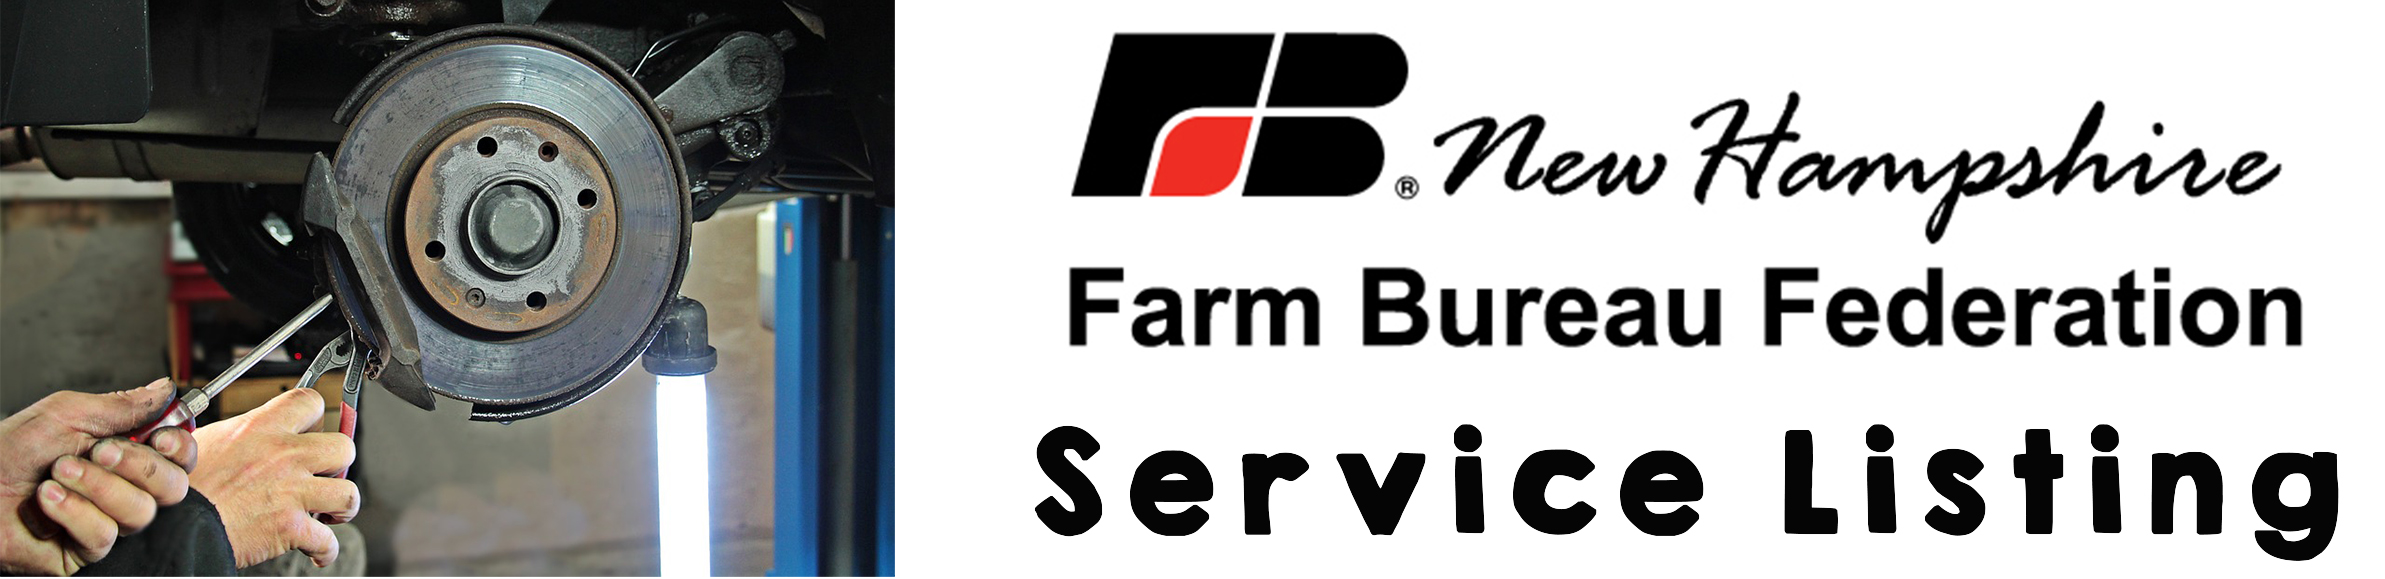 service-listing-new-hampshire-farm-bureau-federation